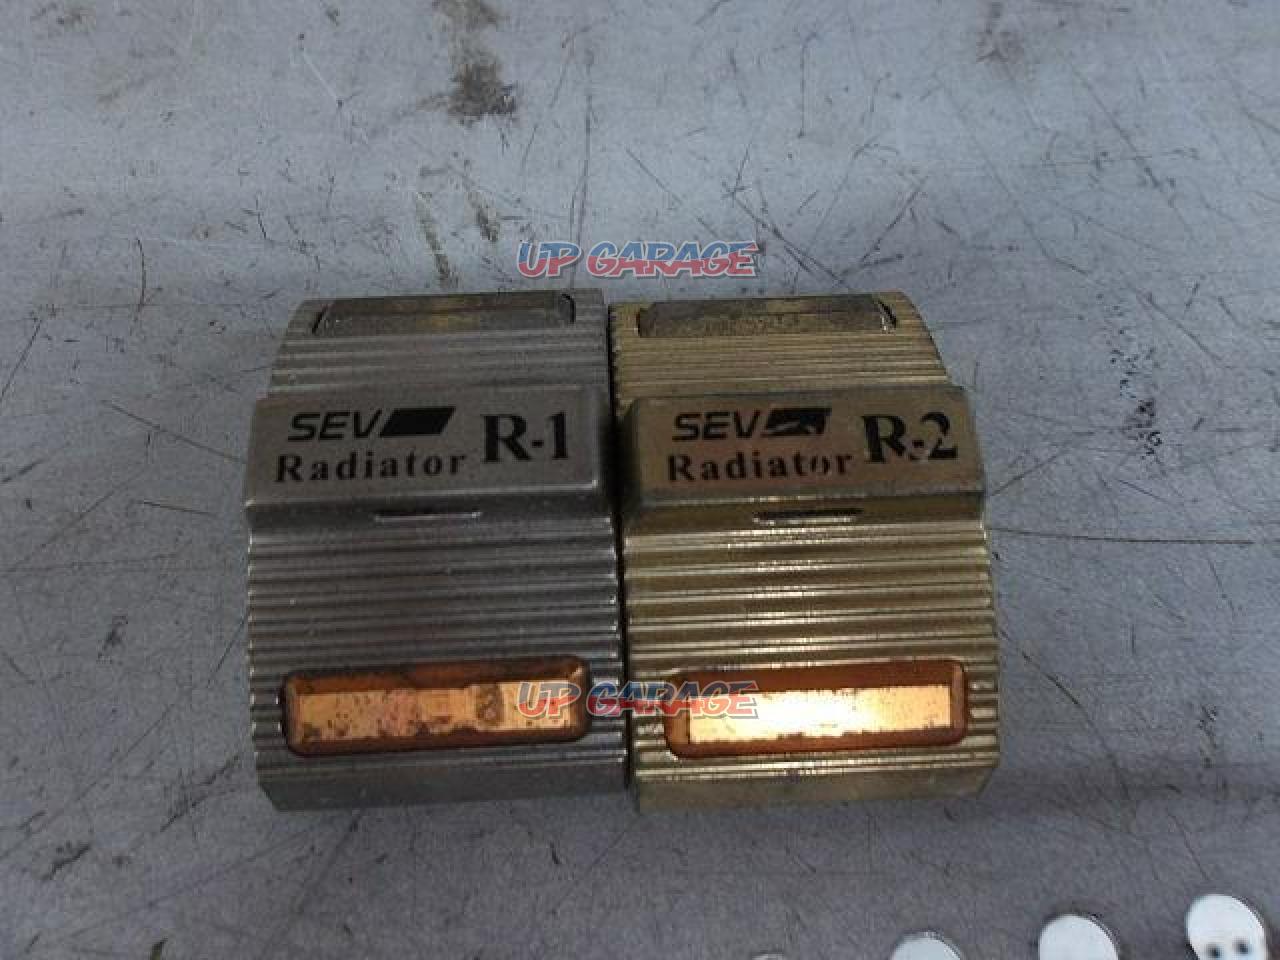 SEV Radiator ラジエター R-1 R-2 セット-rsfmotors.cl